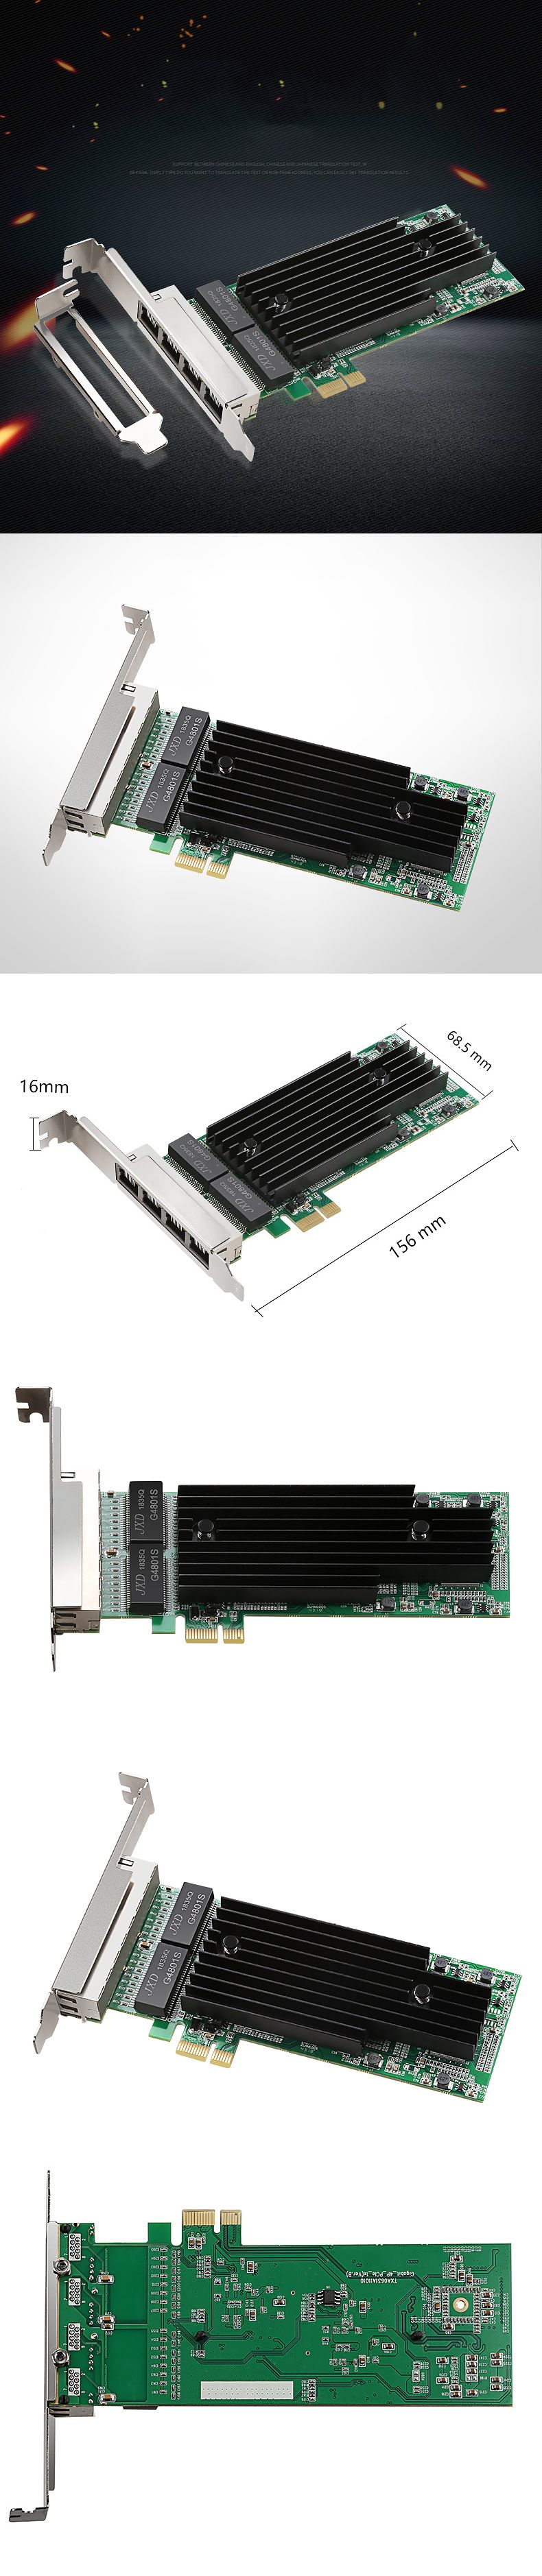 DIEWU-TXA063-Intel-I82575-T4-4-Ports-Gigabit-Ethernet-PCI-Express-X14-Card-1X-Server-Adapter-Network-1651655